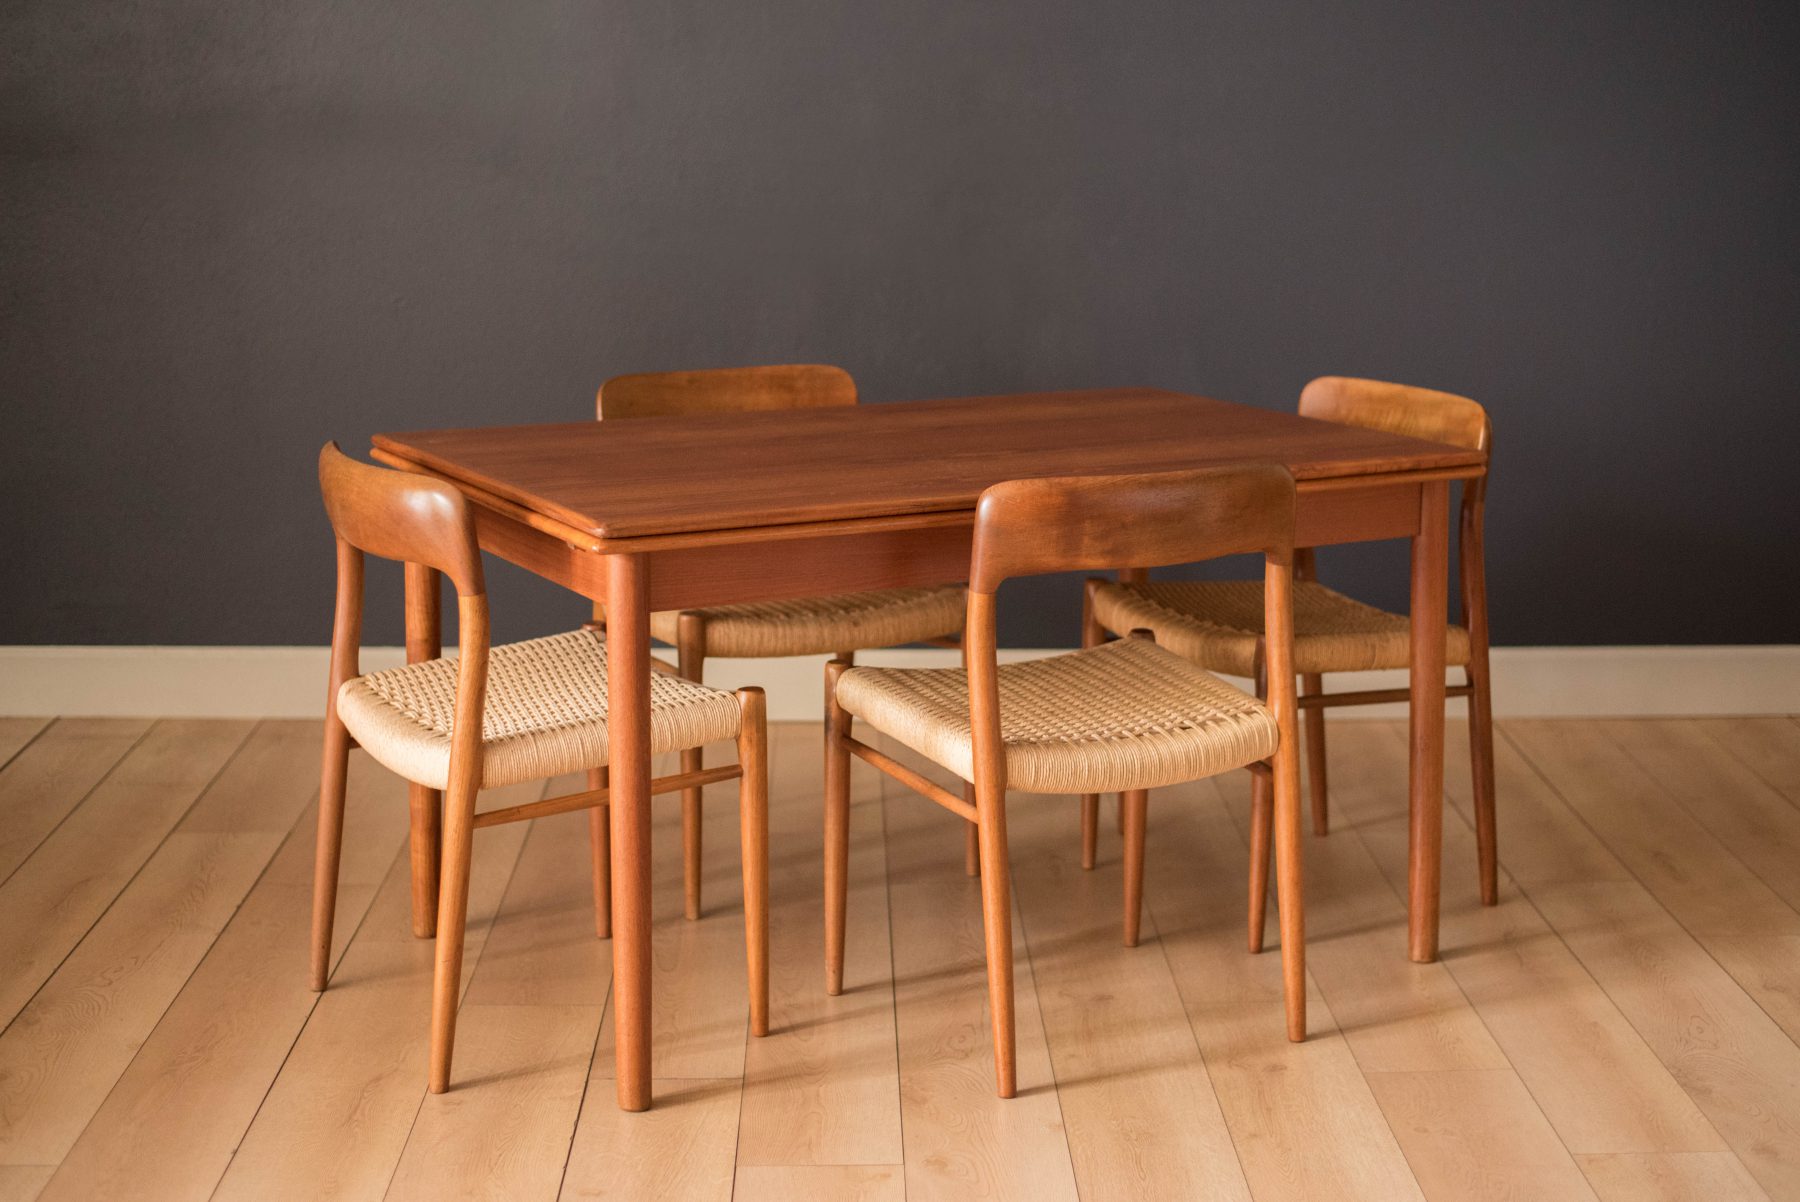 Rectangular Teak Dining Table: A Classic Choice